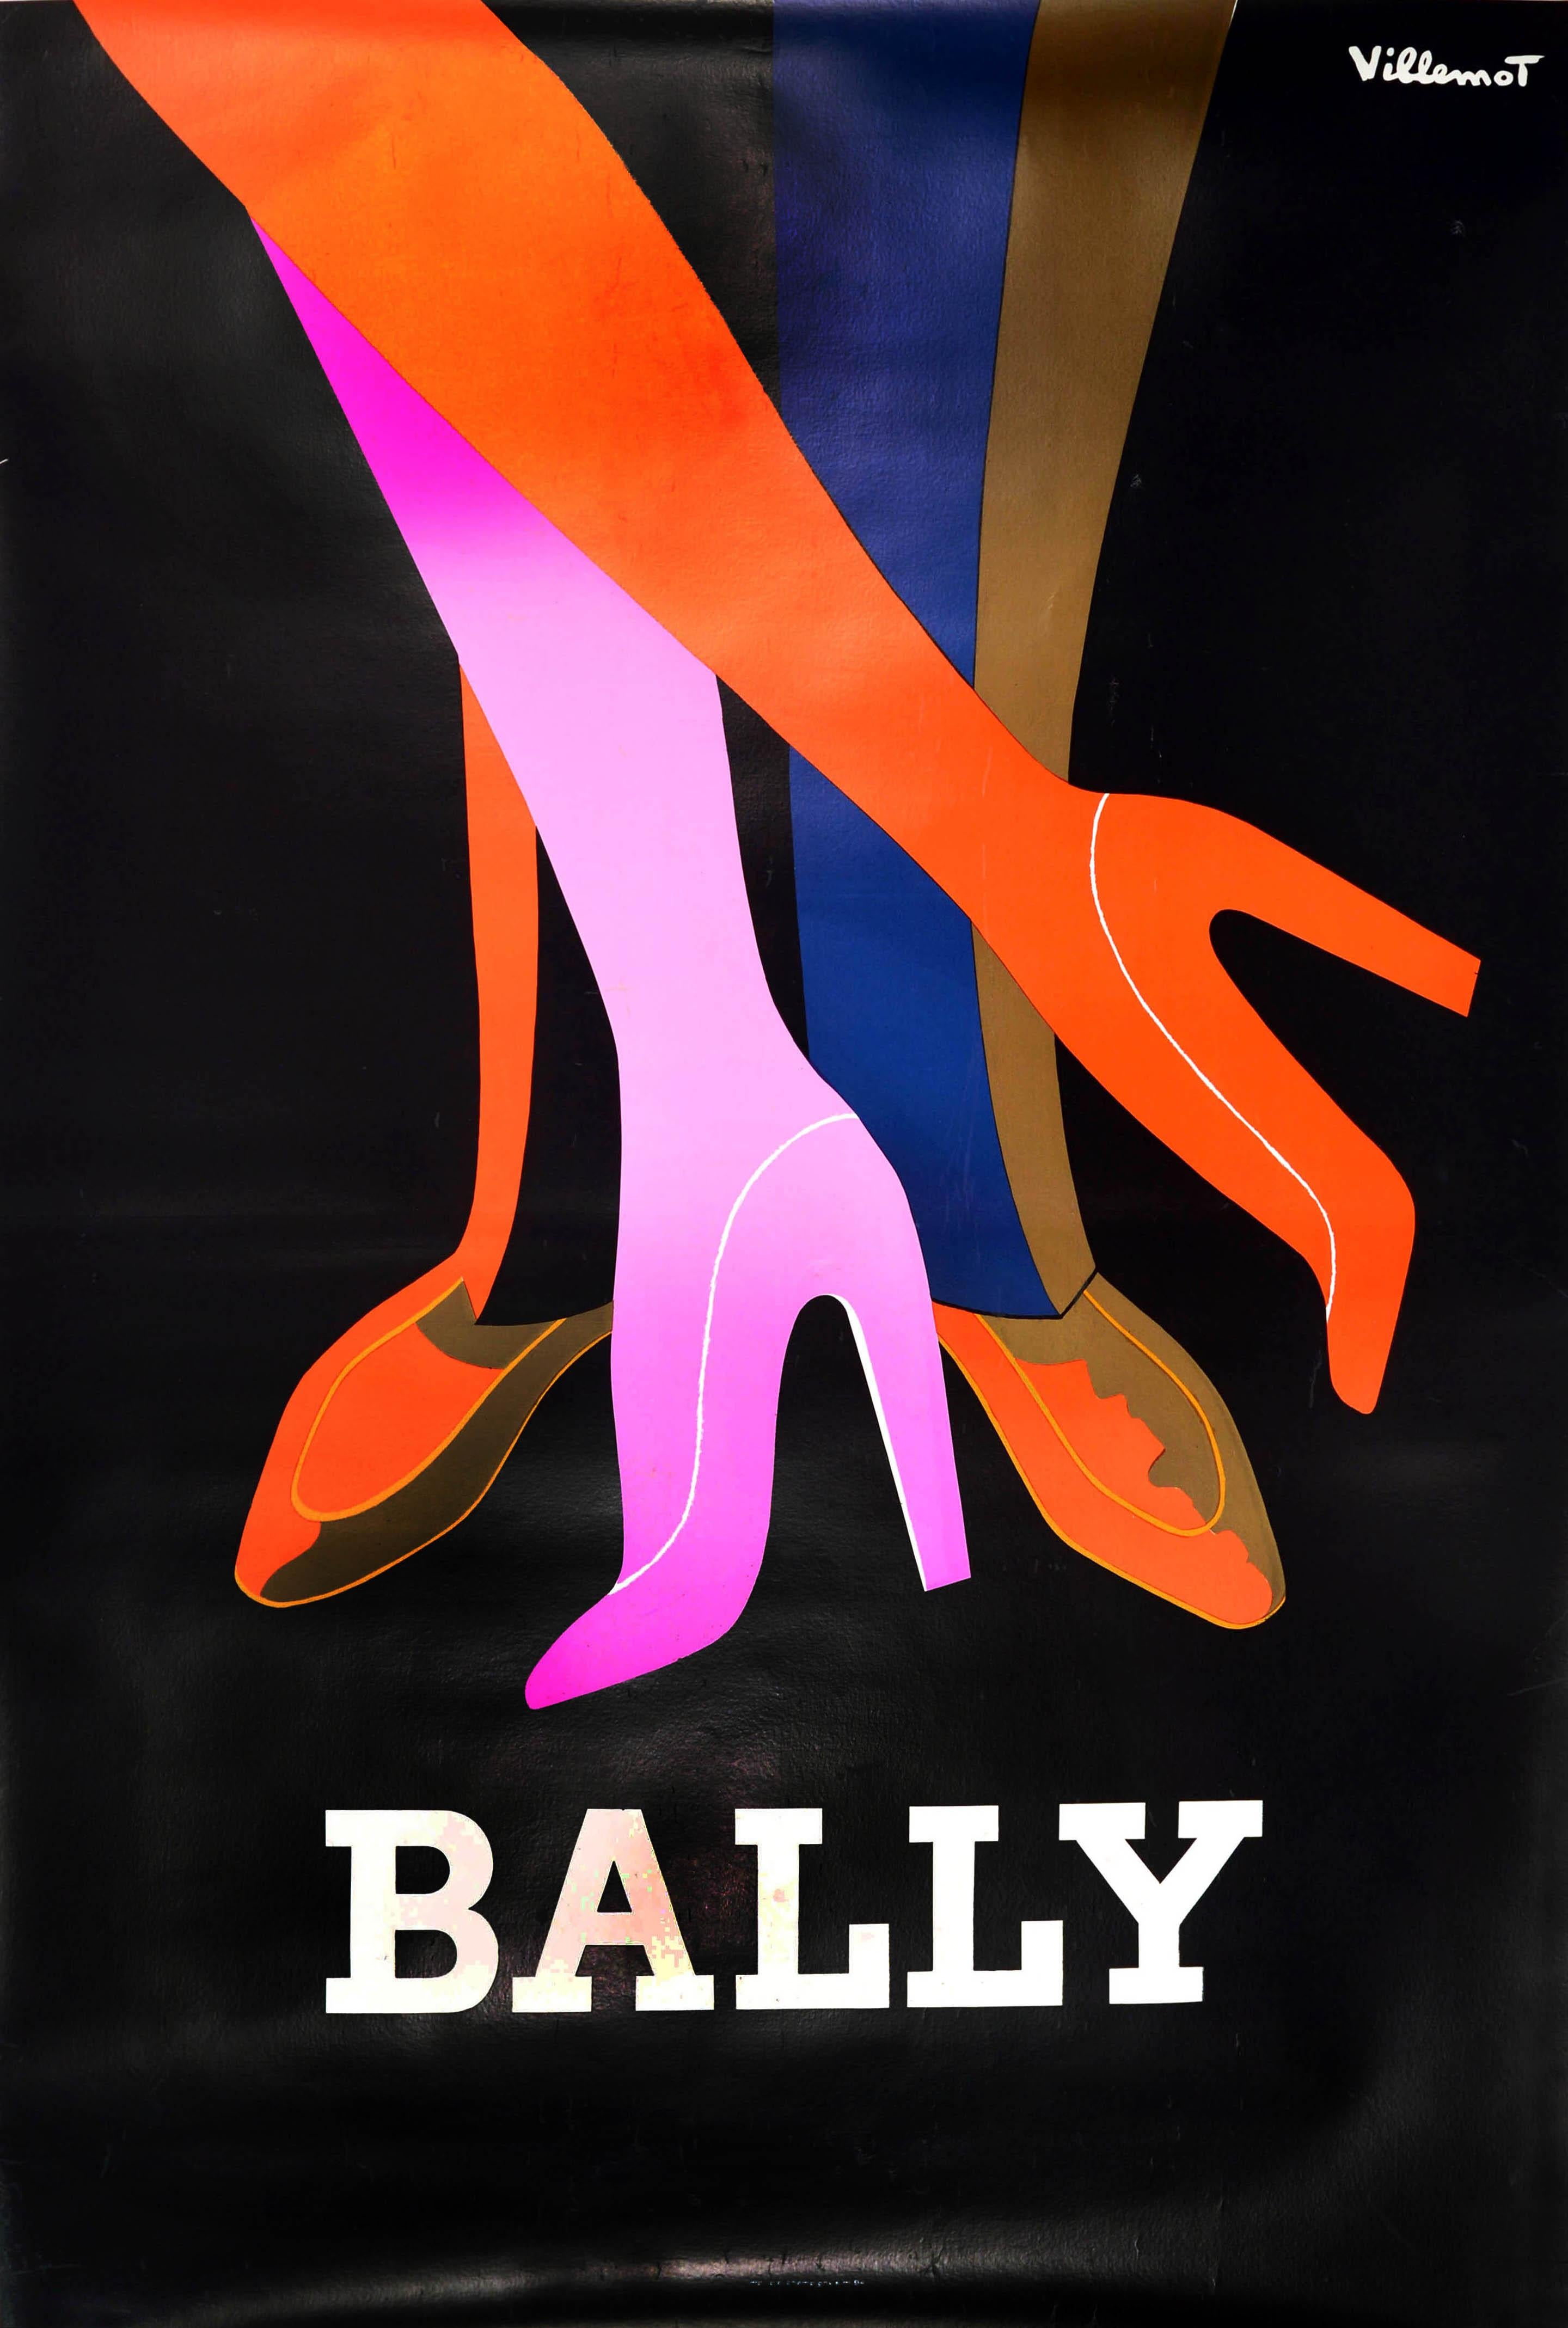 Bernard Villemot Print - Original Vintage Poster Bally Shoes Fashion Style Graphic Design Advertising Art